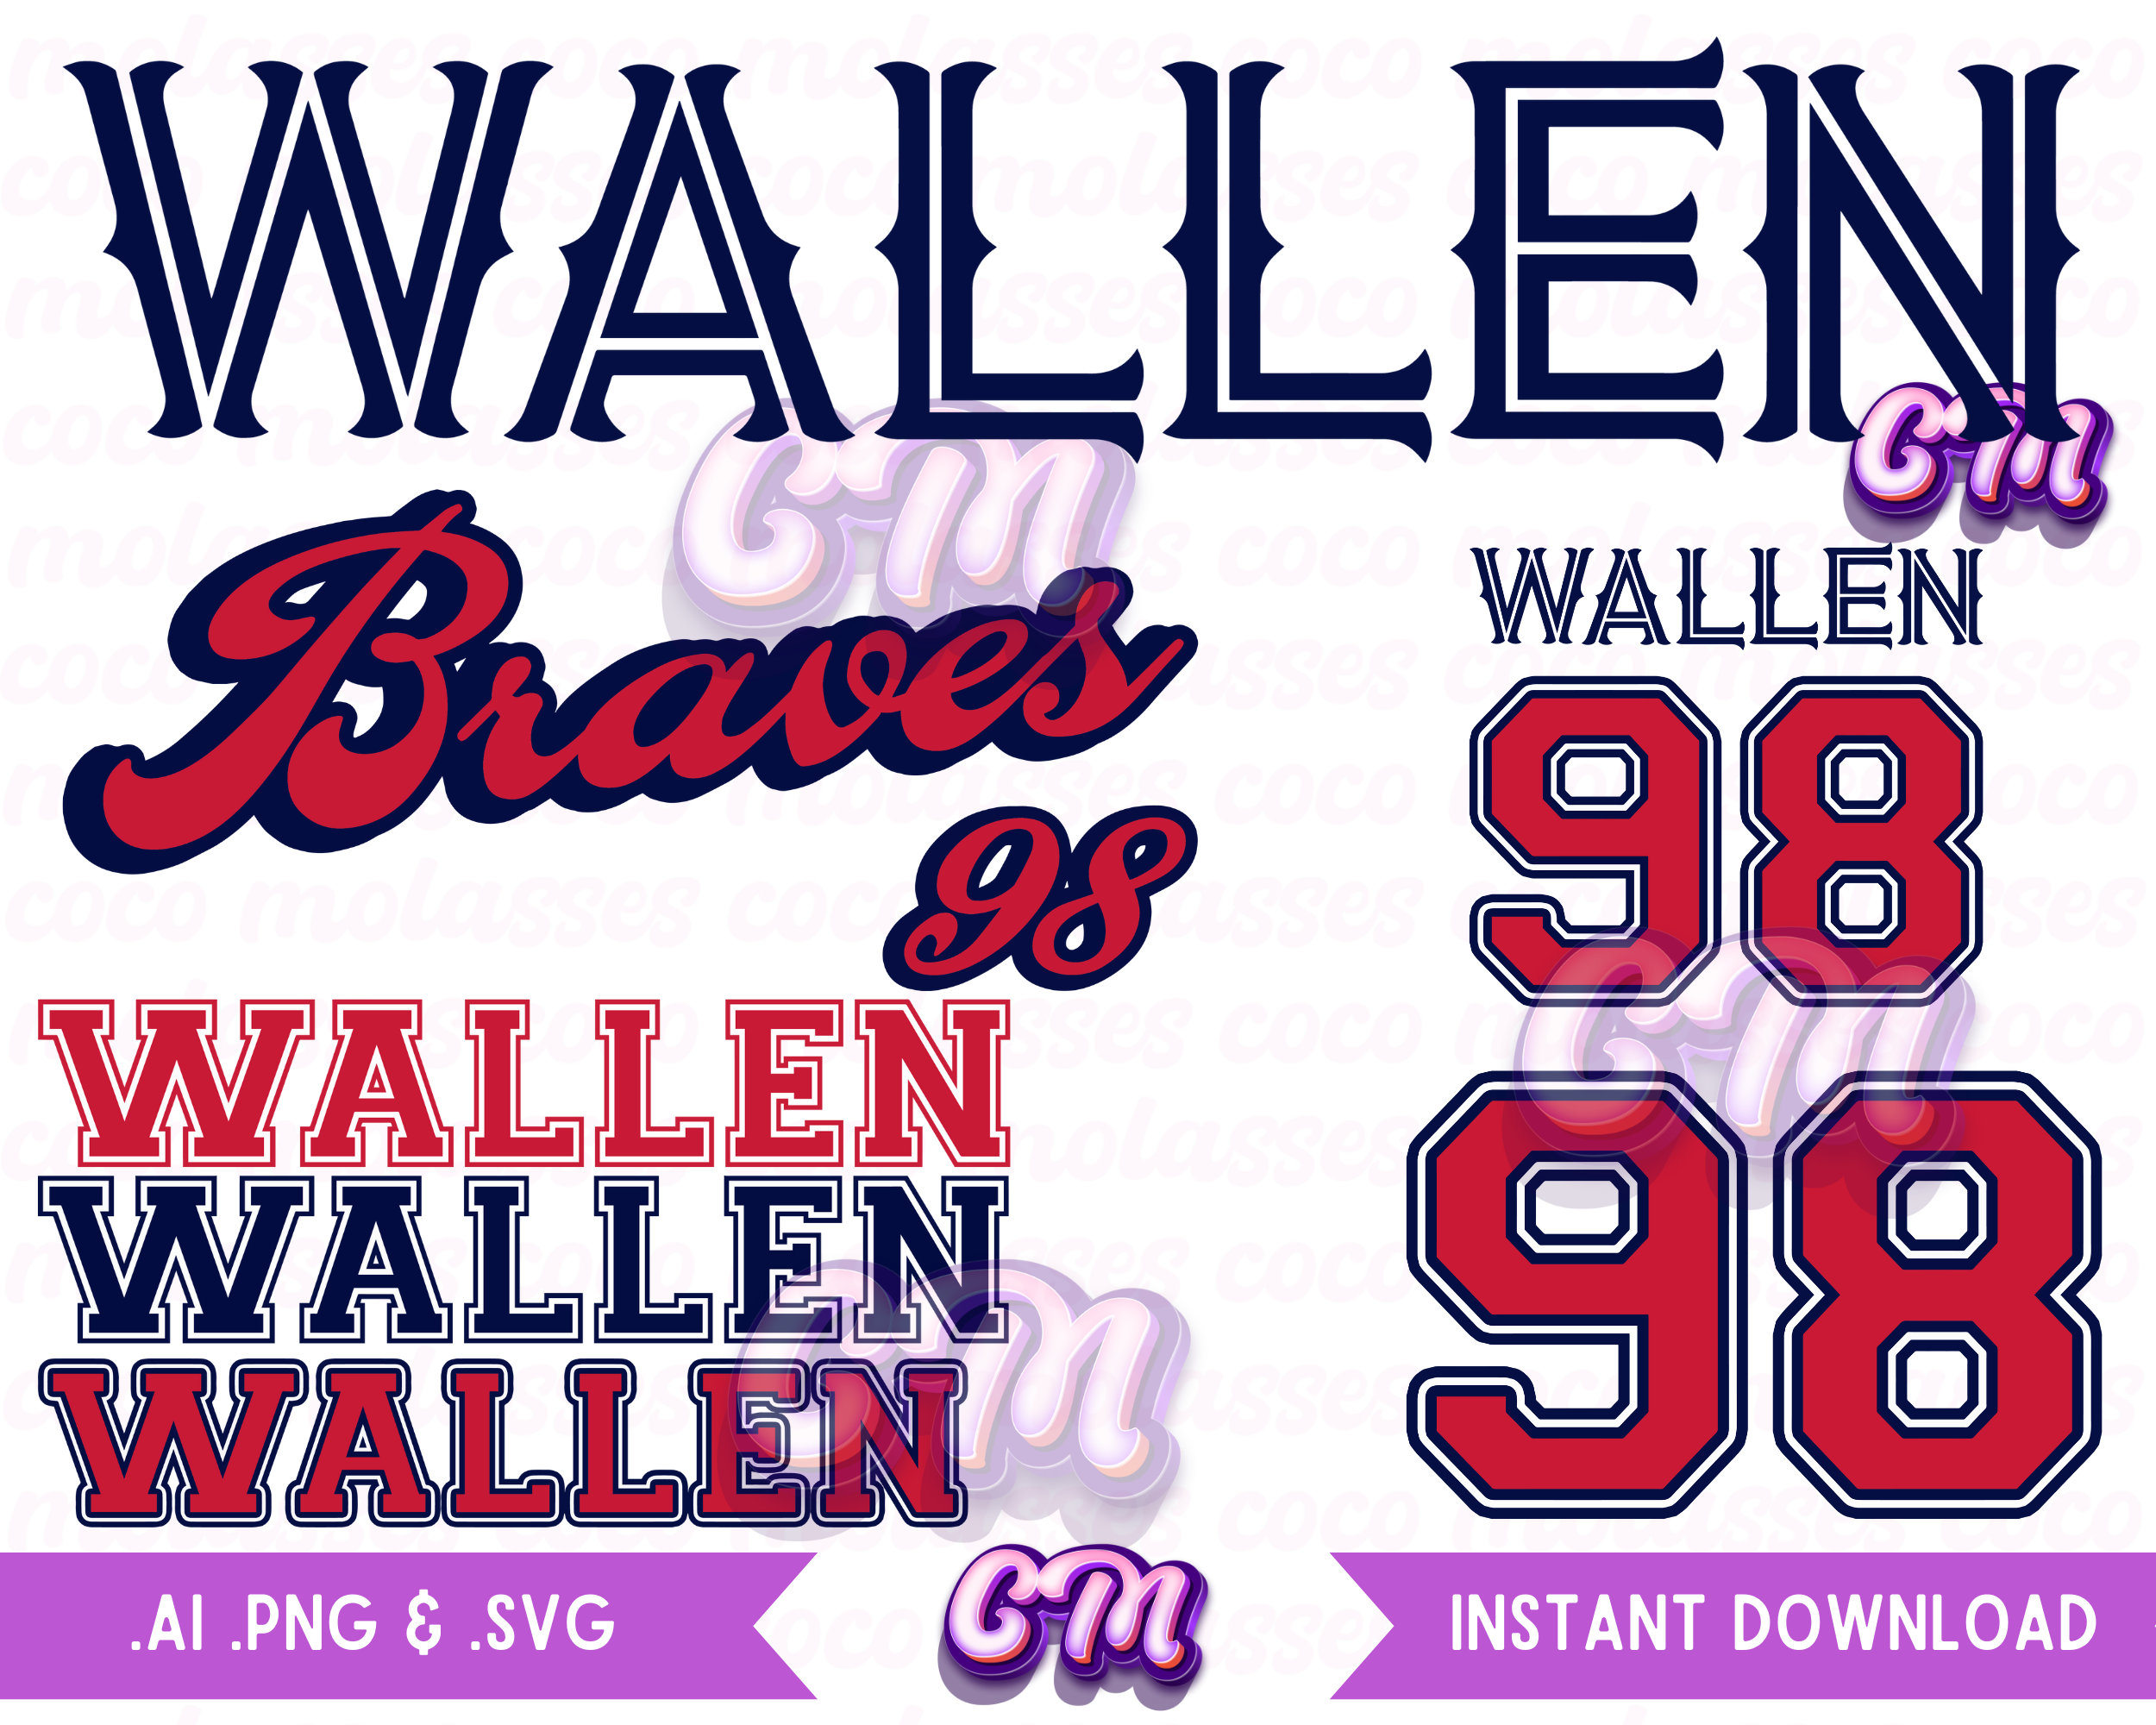 Wallen 98 Braves SVG, Country Music SVG, Morgan Wallen 98 Braves SVG